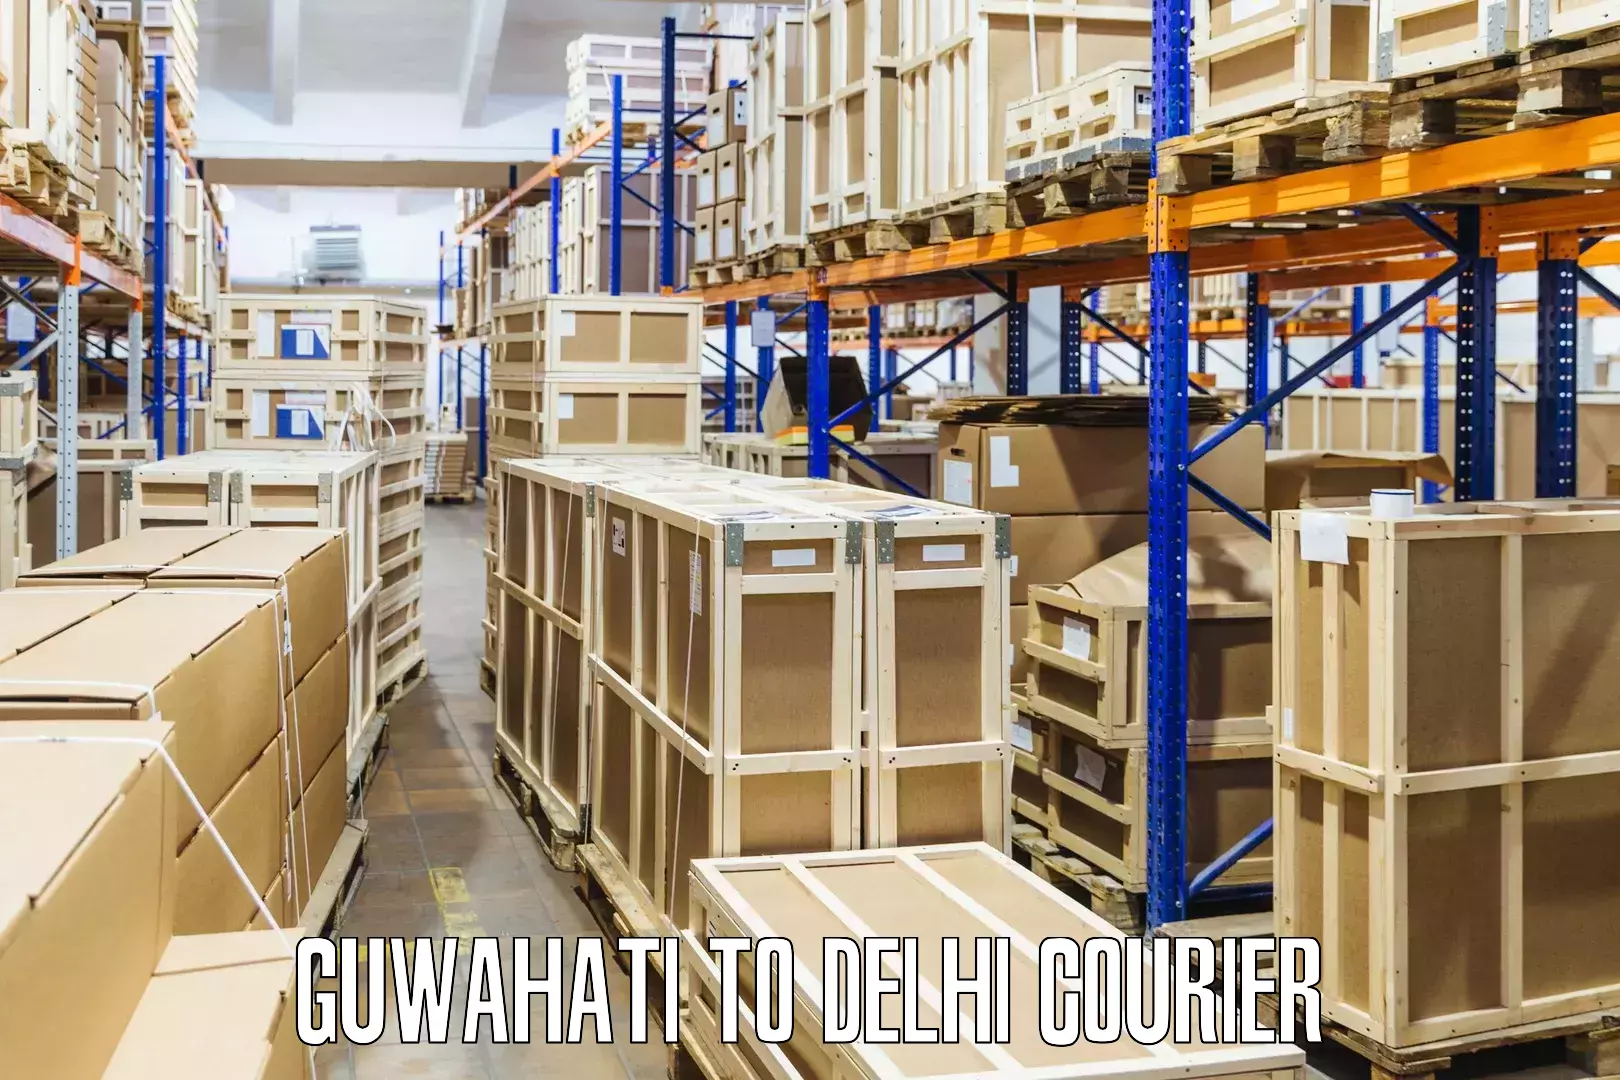 Courier service innovation Guwahati to Delhi